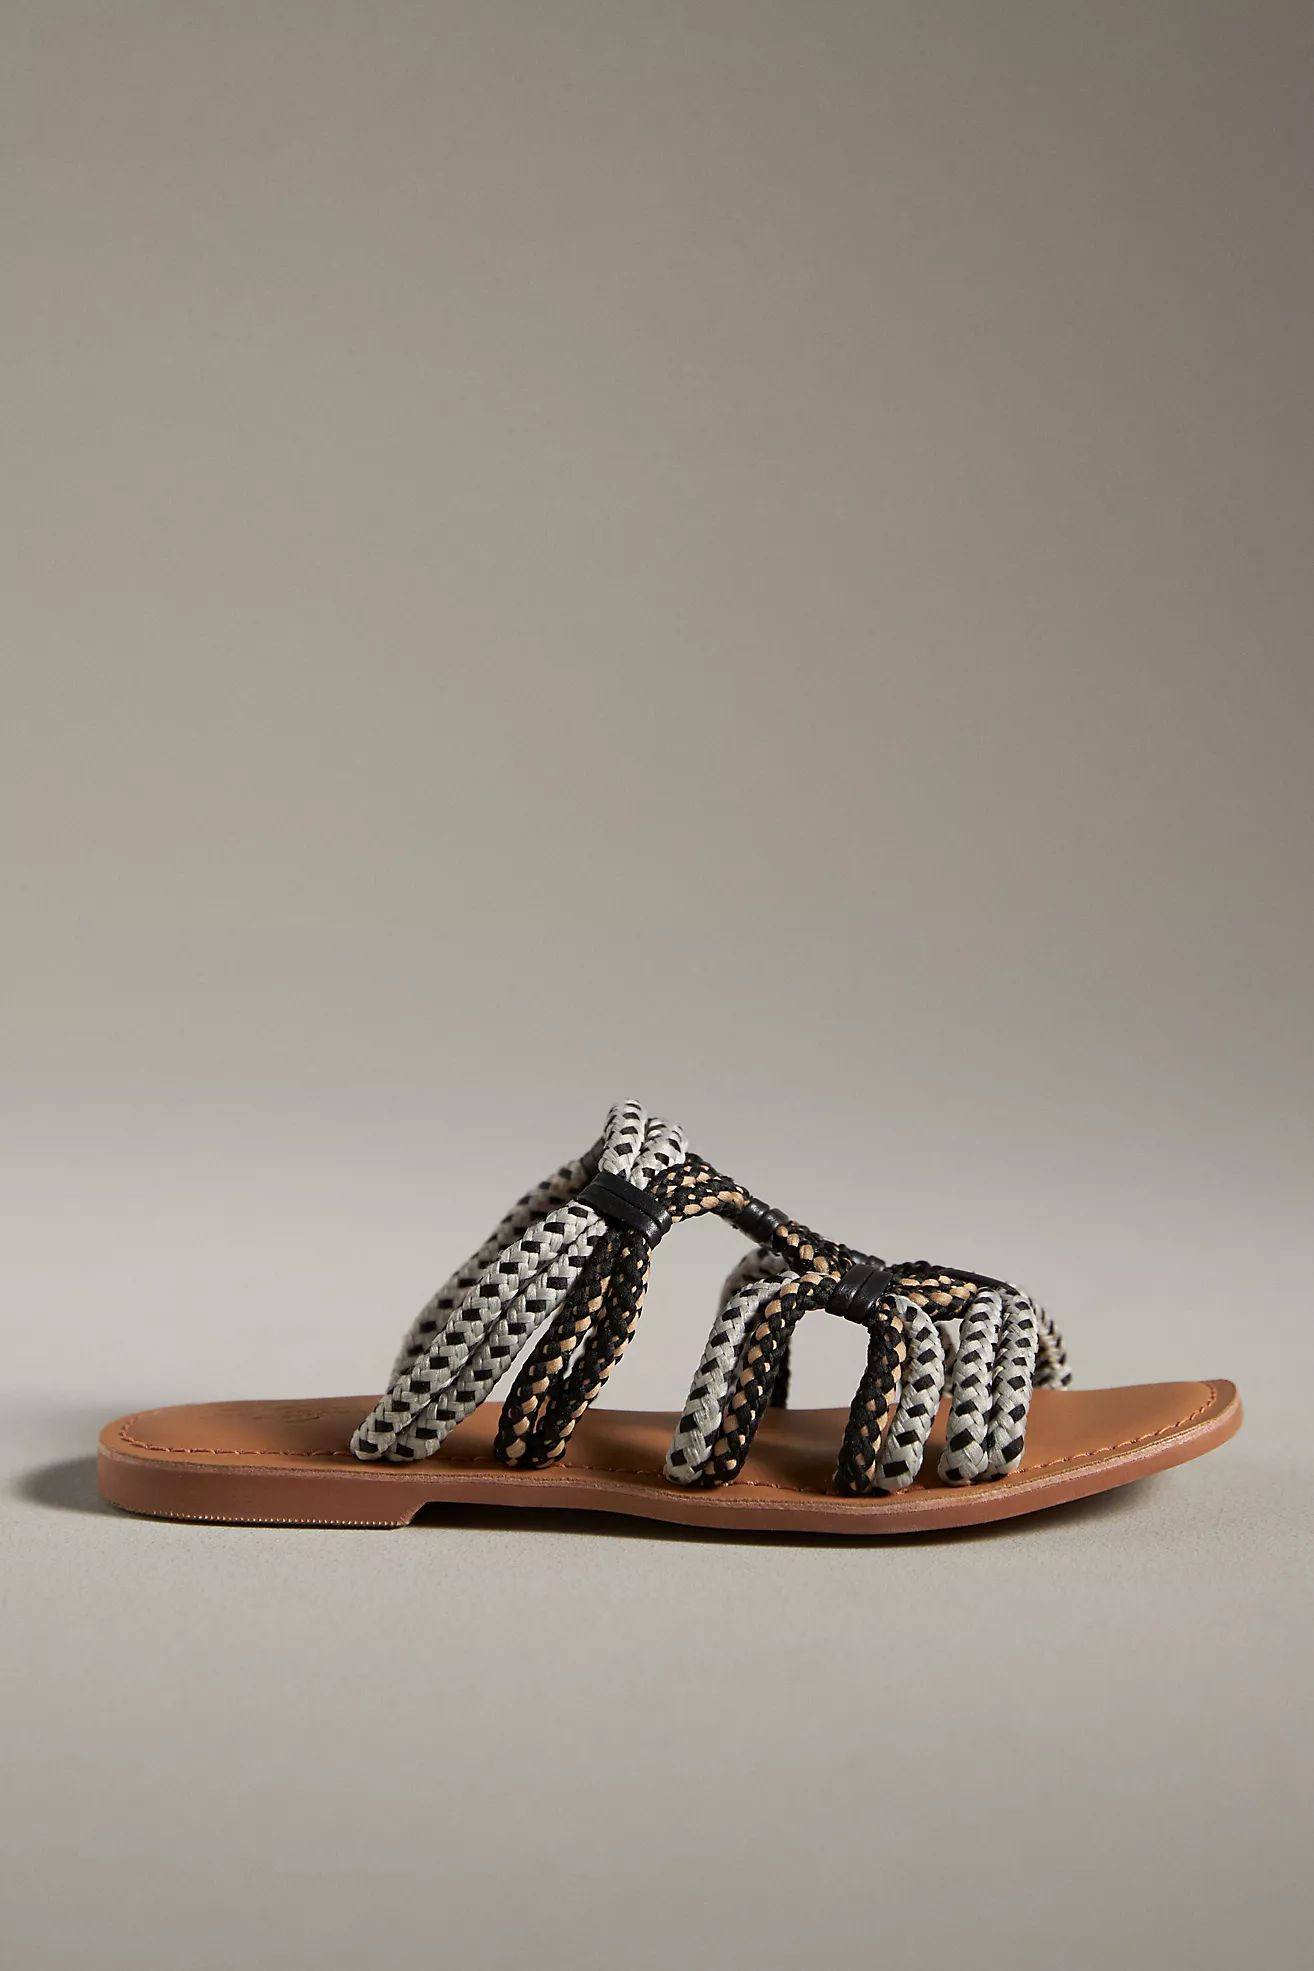 BC Footwear by Seychelles Read My Mind Sandals | Anthropologie (US)